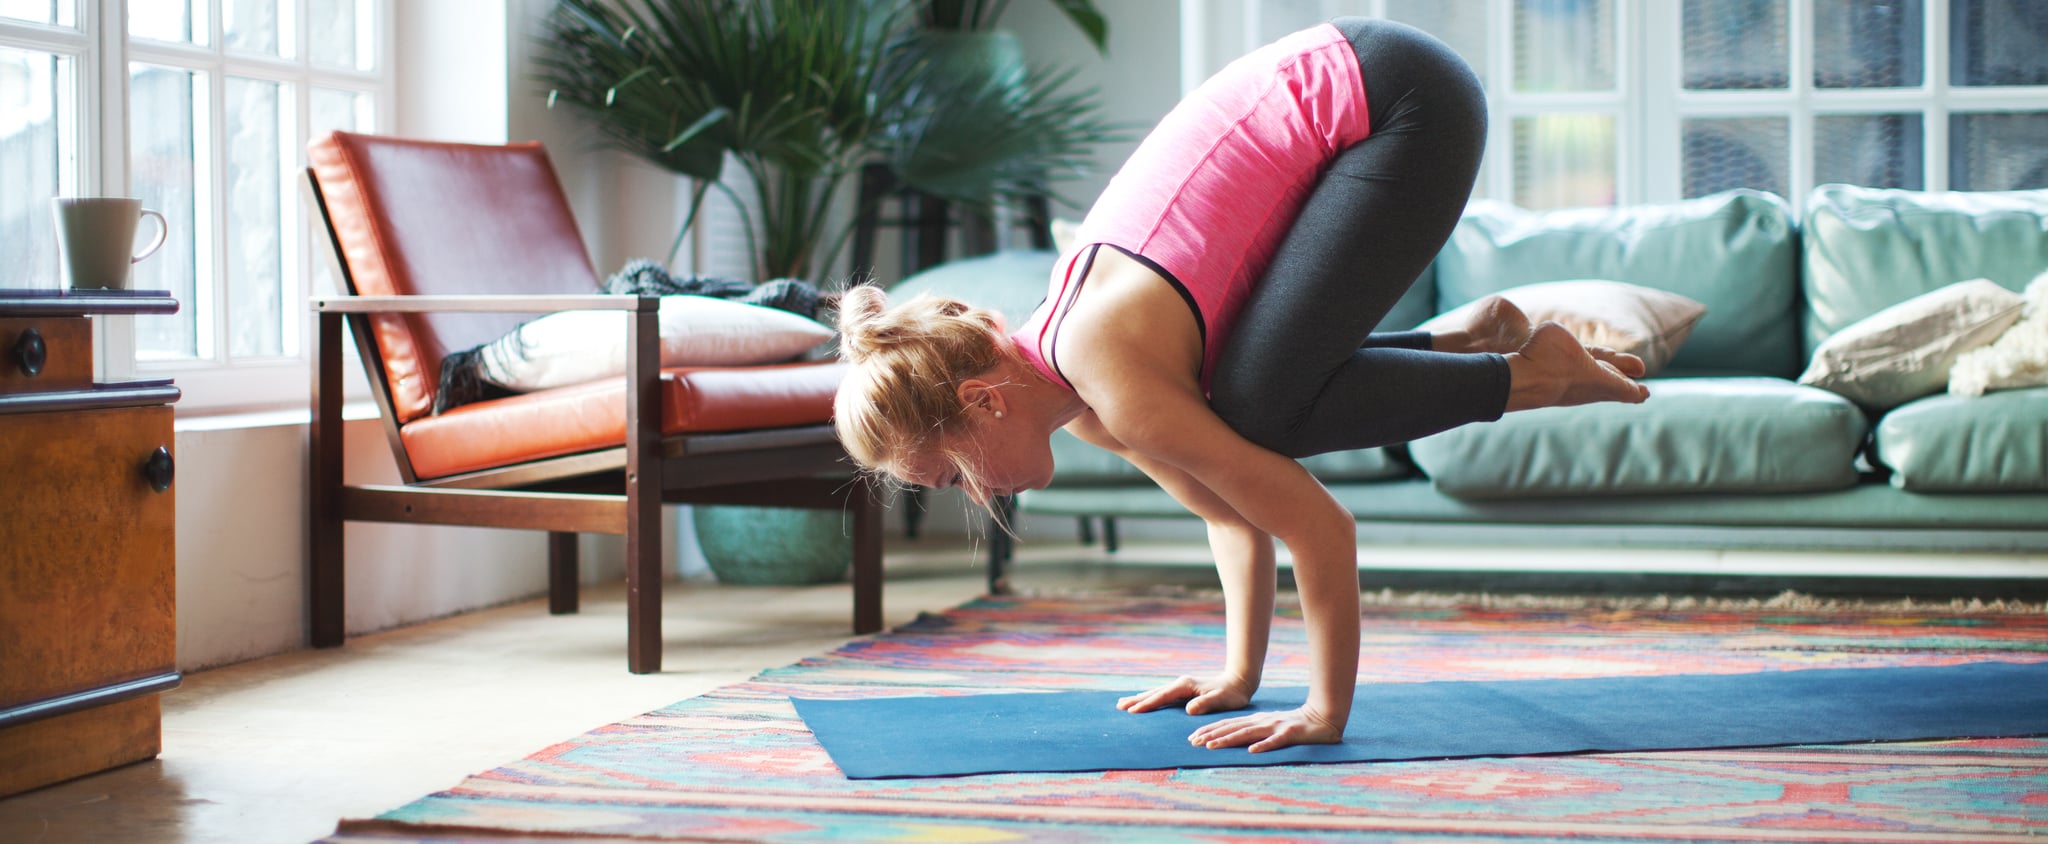 Core work with a yoga block — YOGABYCANDACE